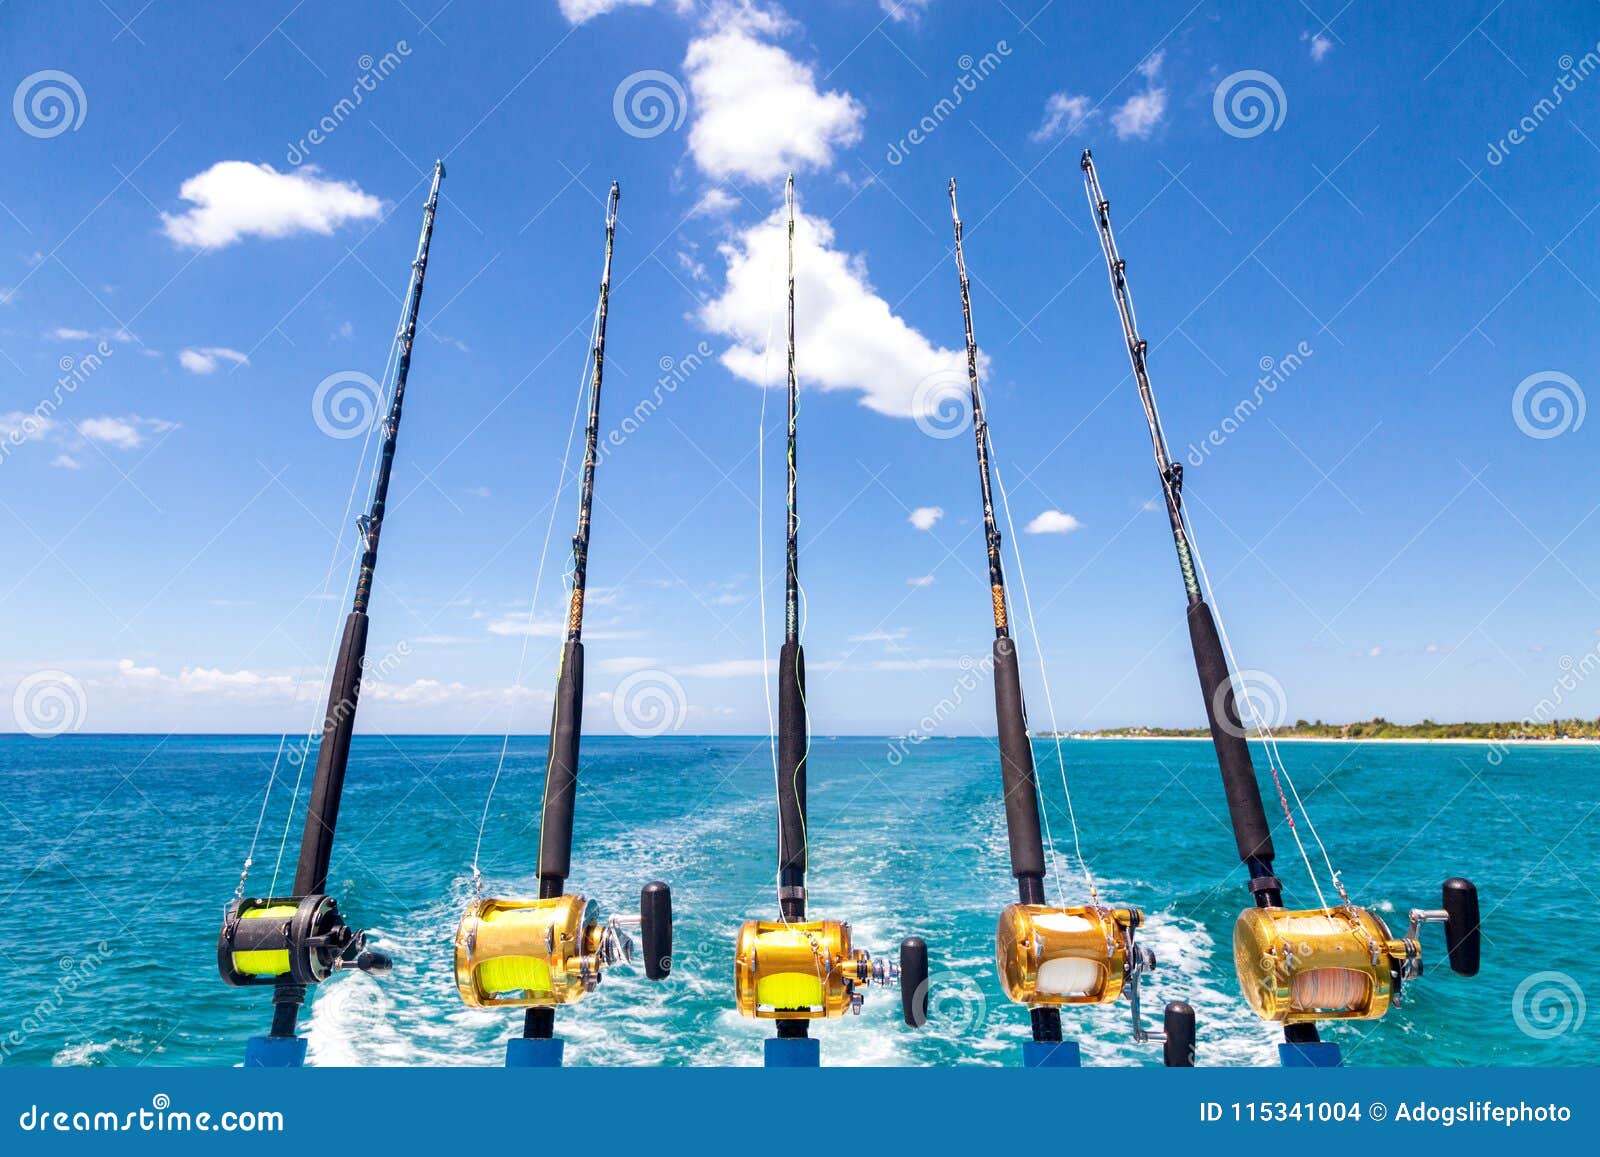 row of deep sea fishing rods on boat